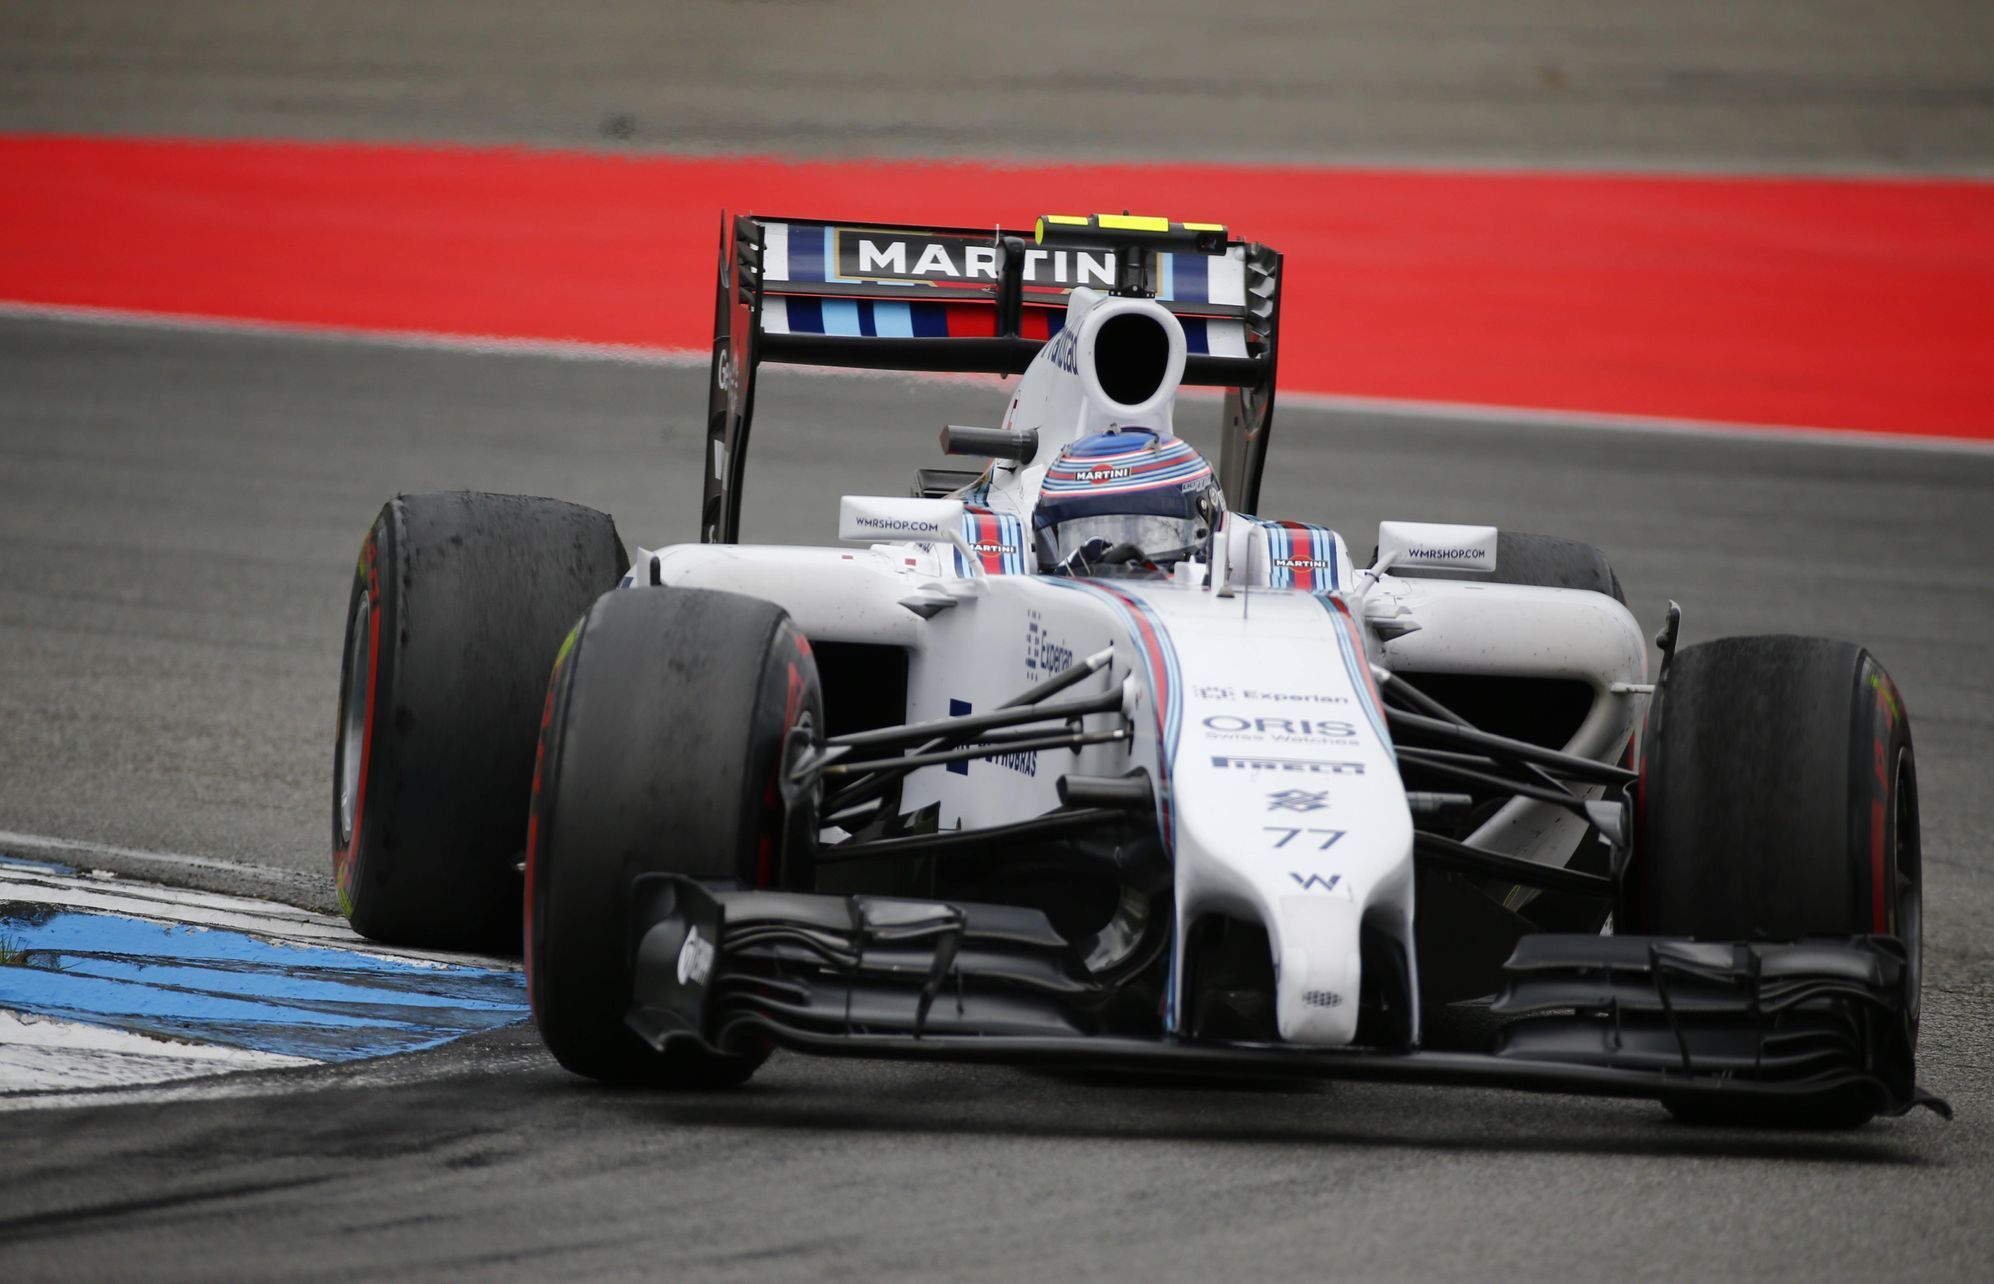 Williams Formula One driver Bottas of Finland drives through a corner during German F1 Grand Prix at Hockenheim